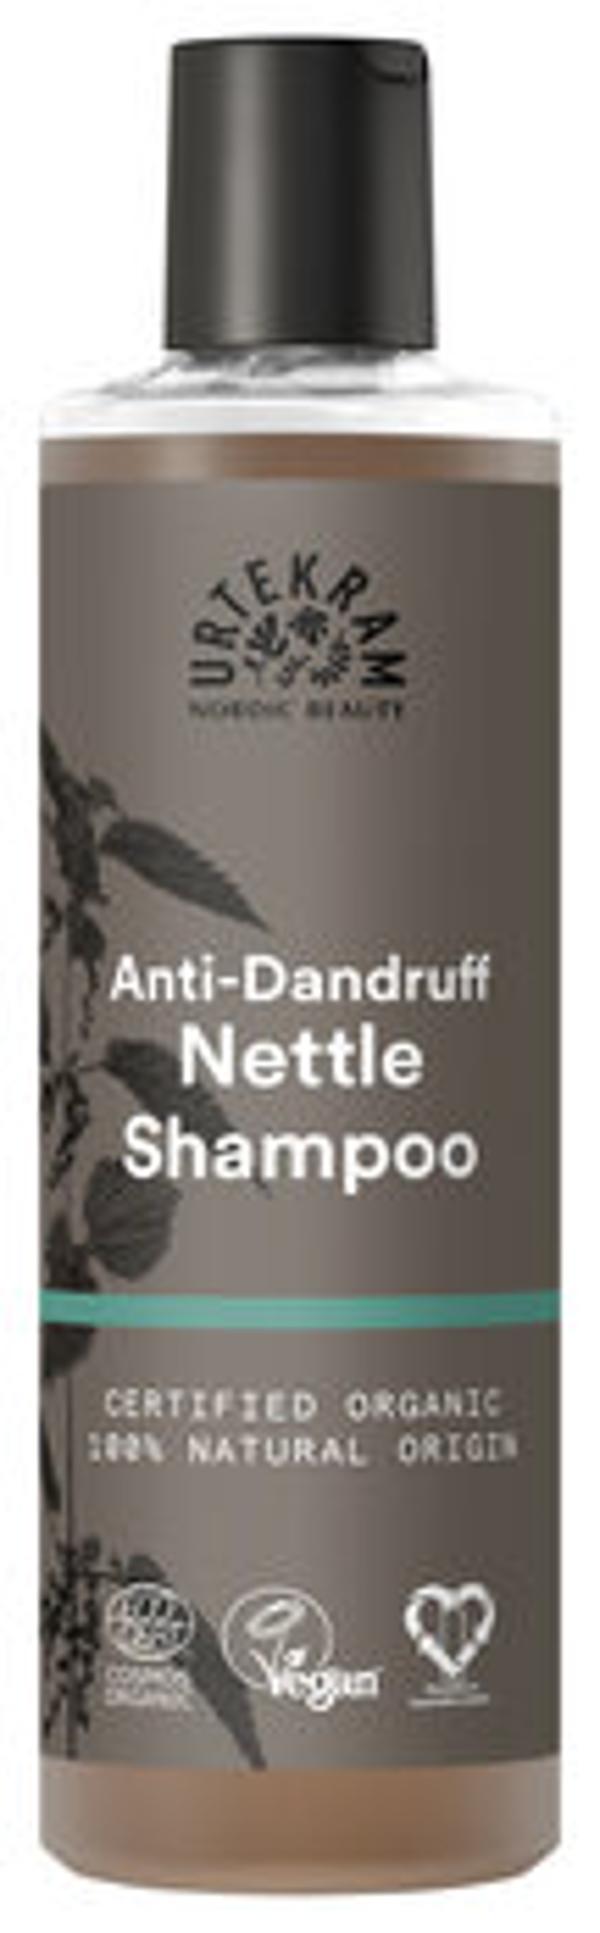 Produktfoto zu Brennessel Shampoo gegen Schuppen